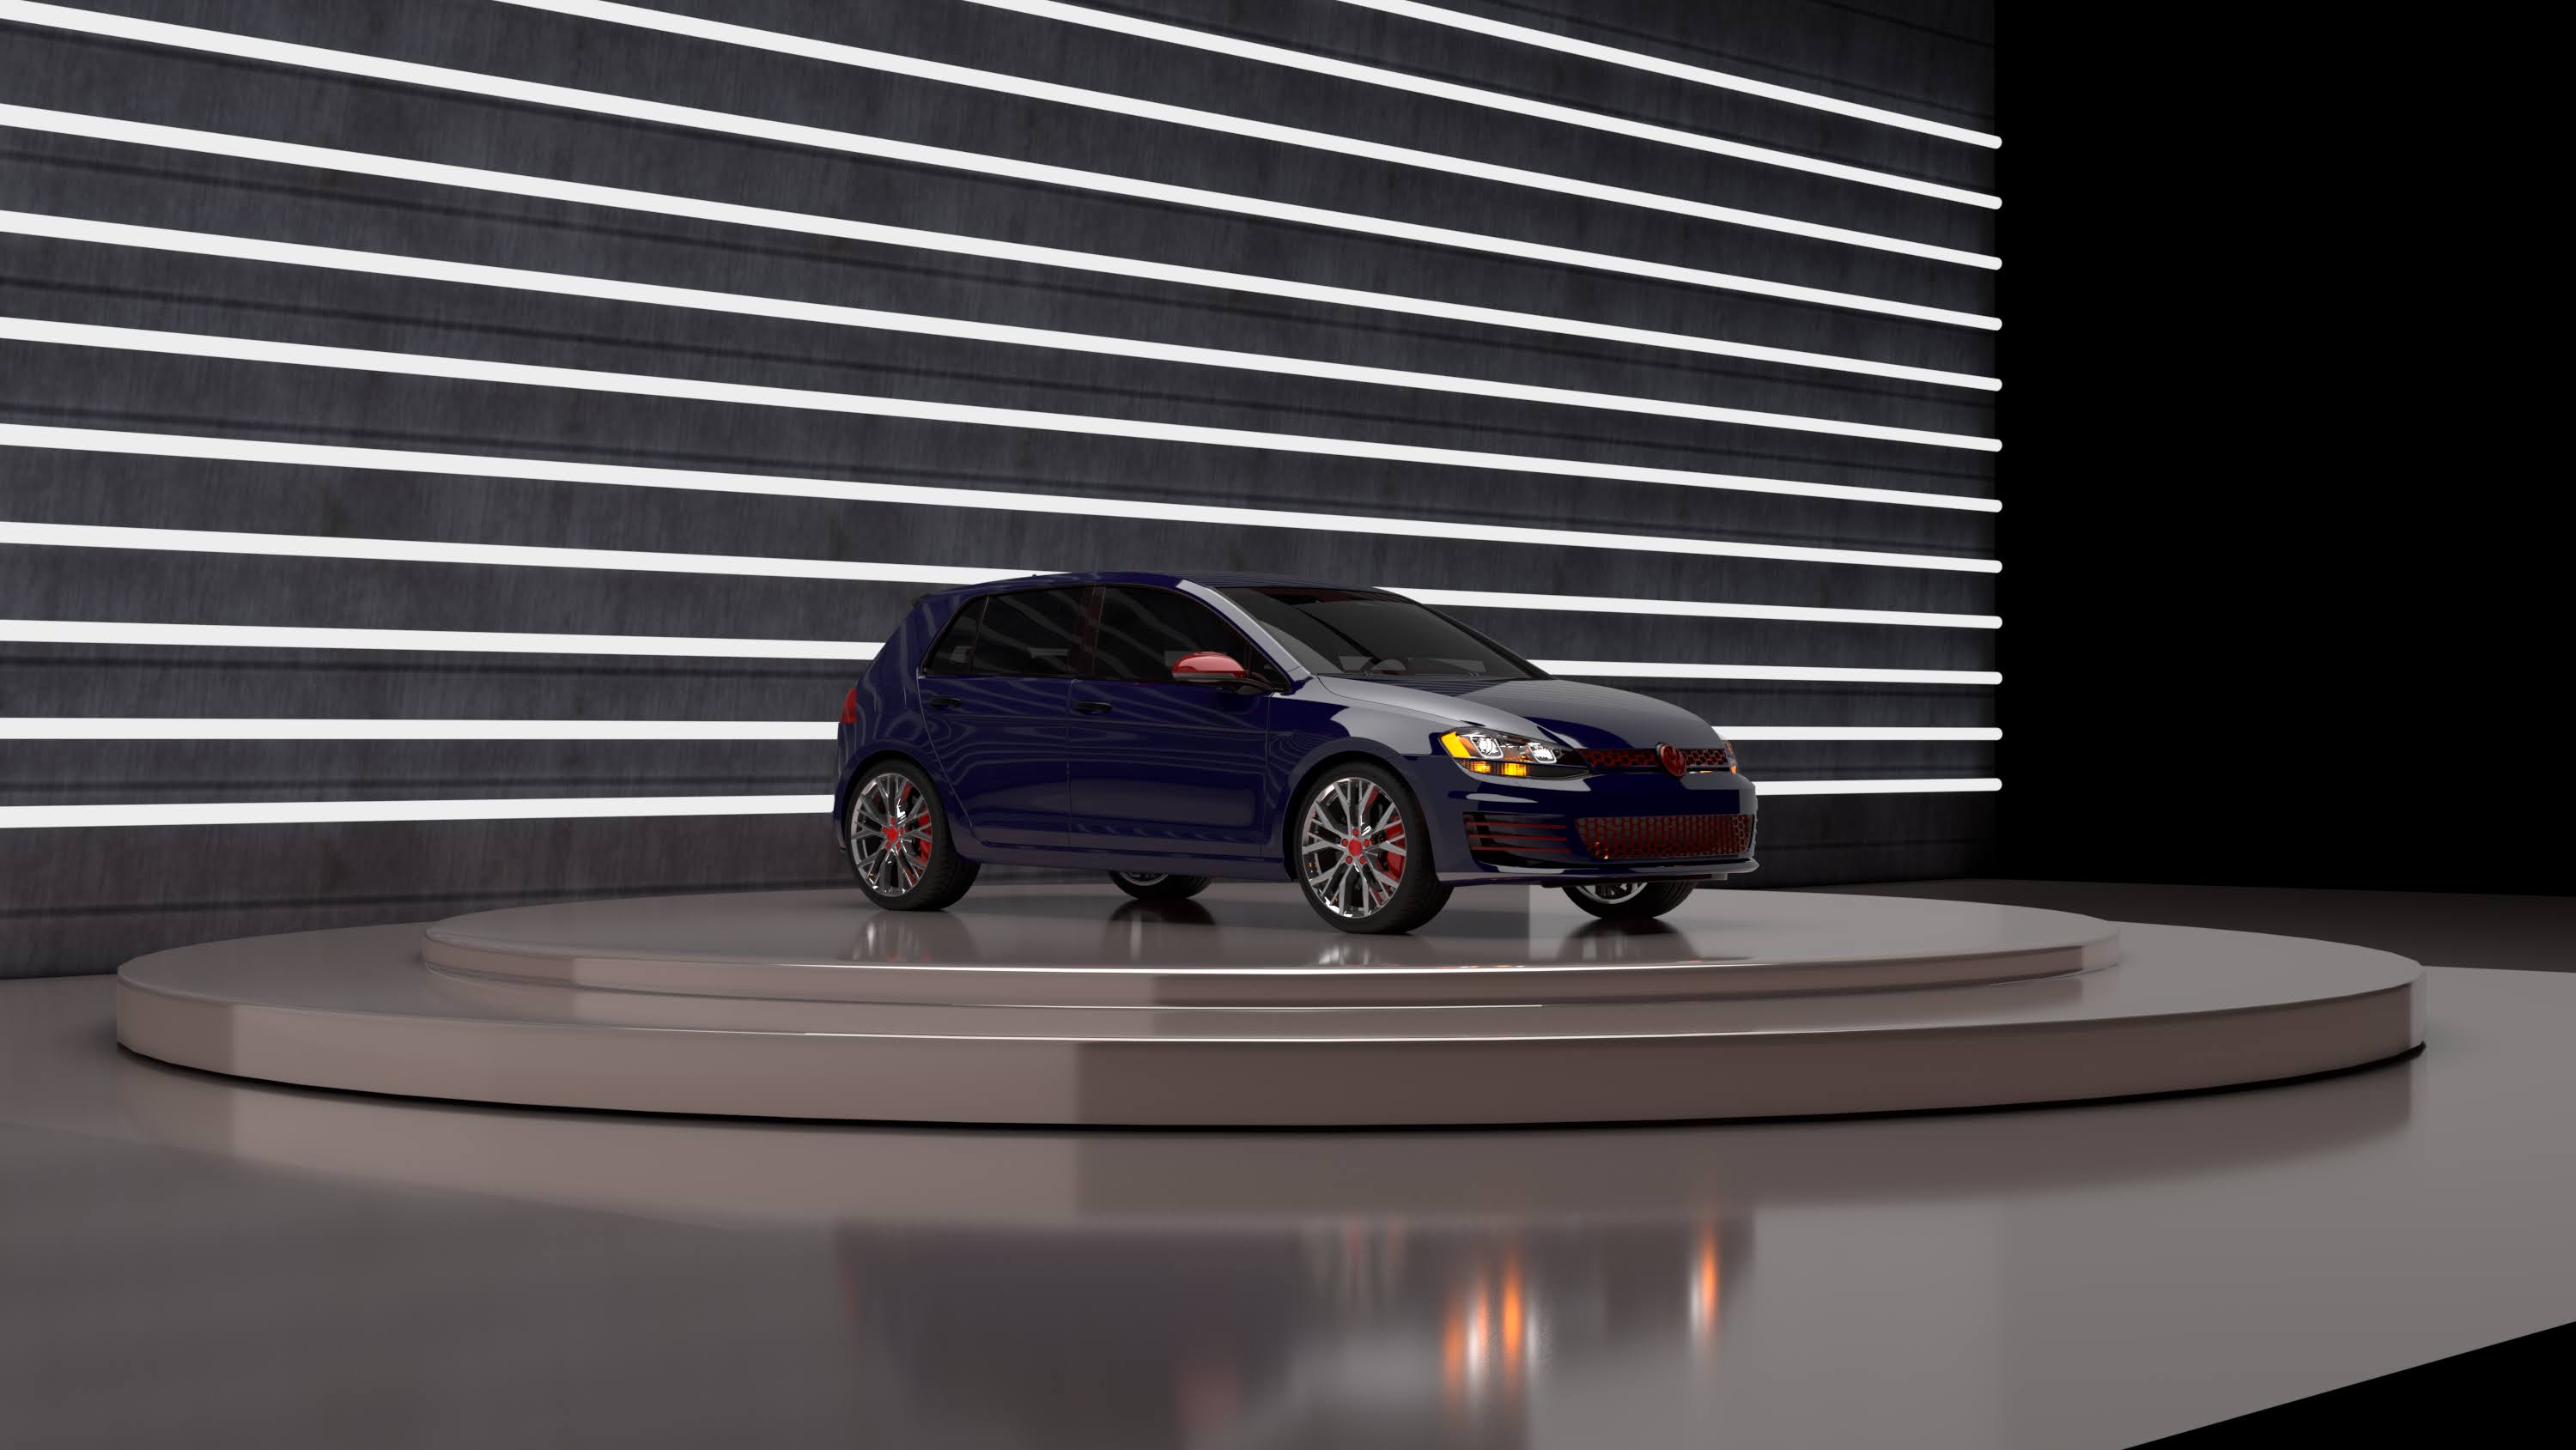 Volkswagen Gol | Texturing | Modeling | Animation 3D